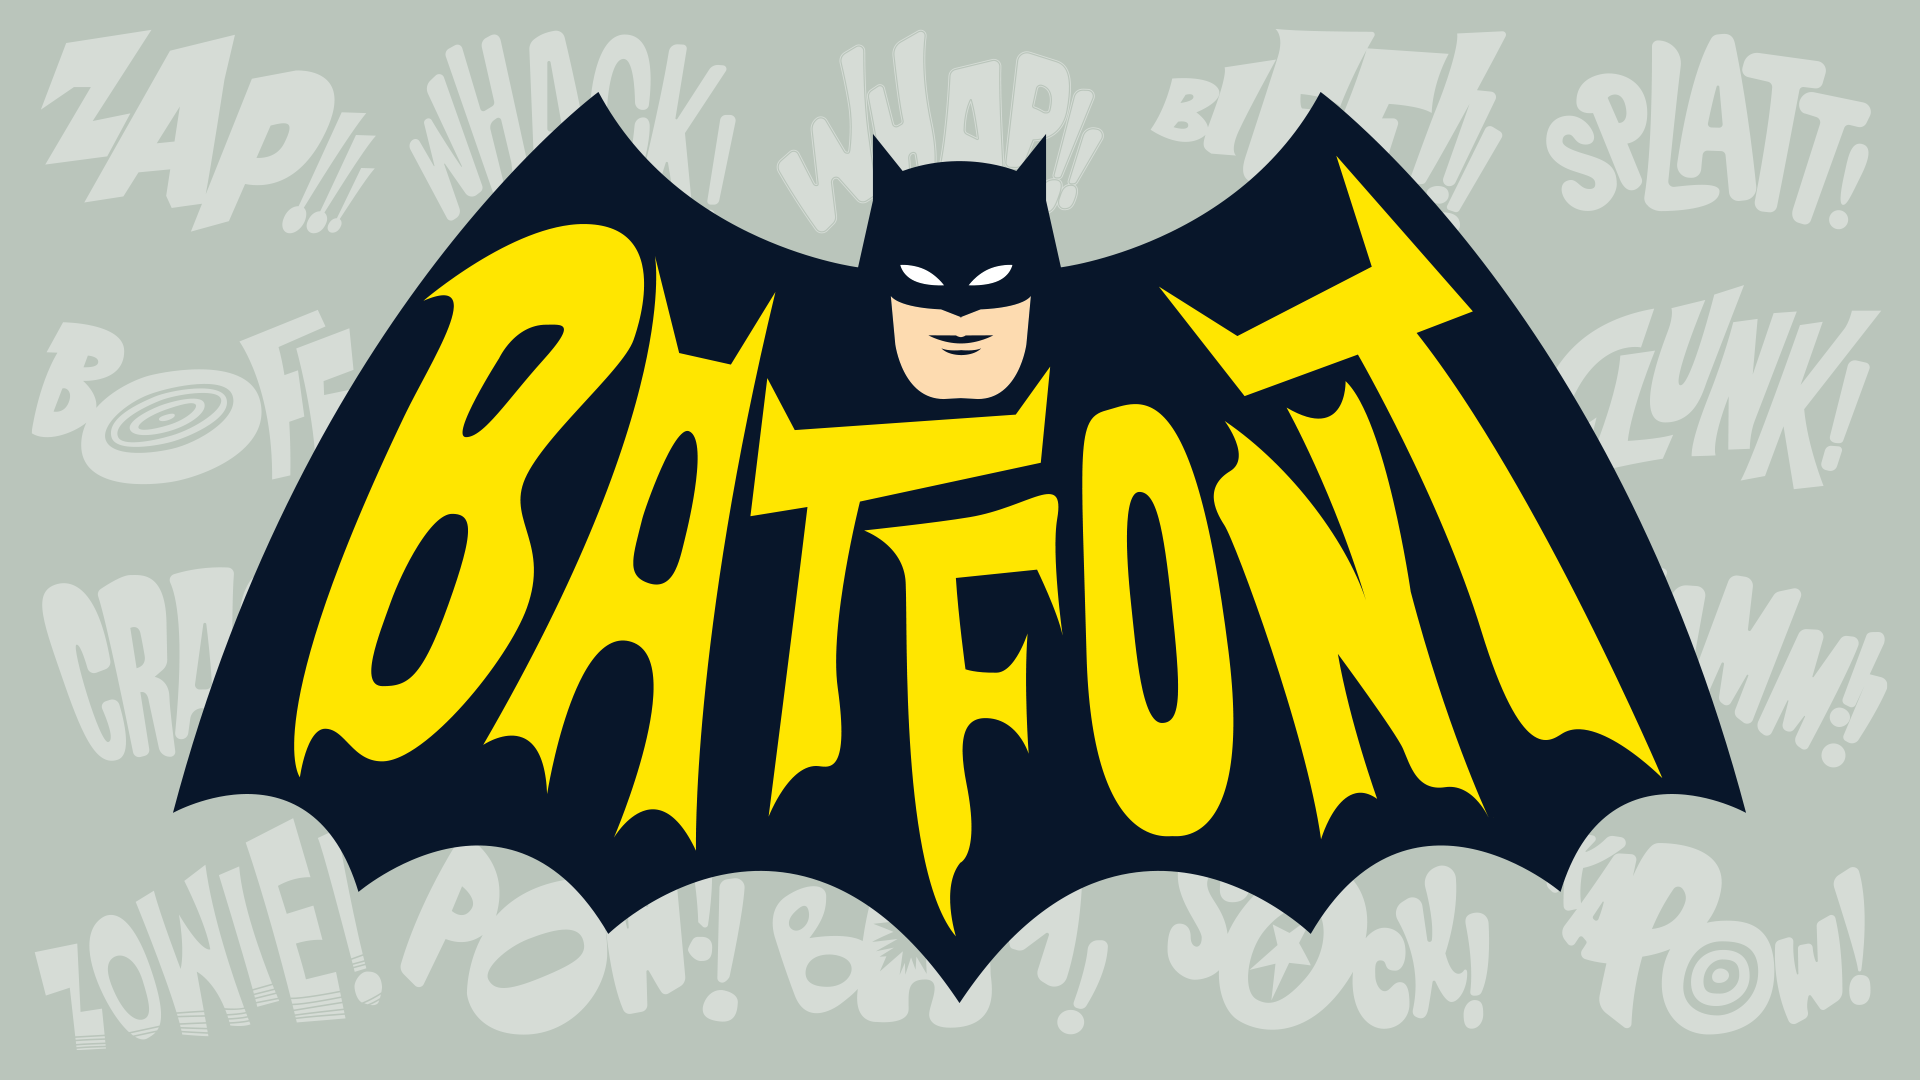 Download another cool and eclectic GAUTFONT Batfont